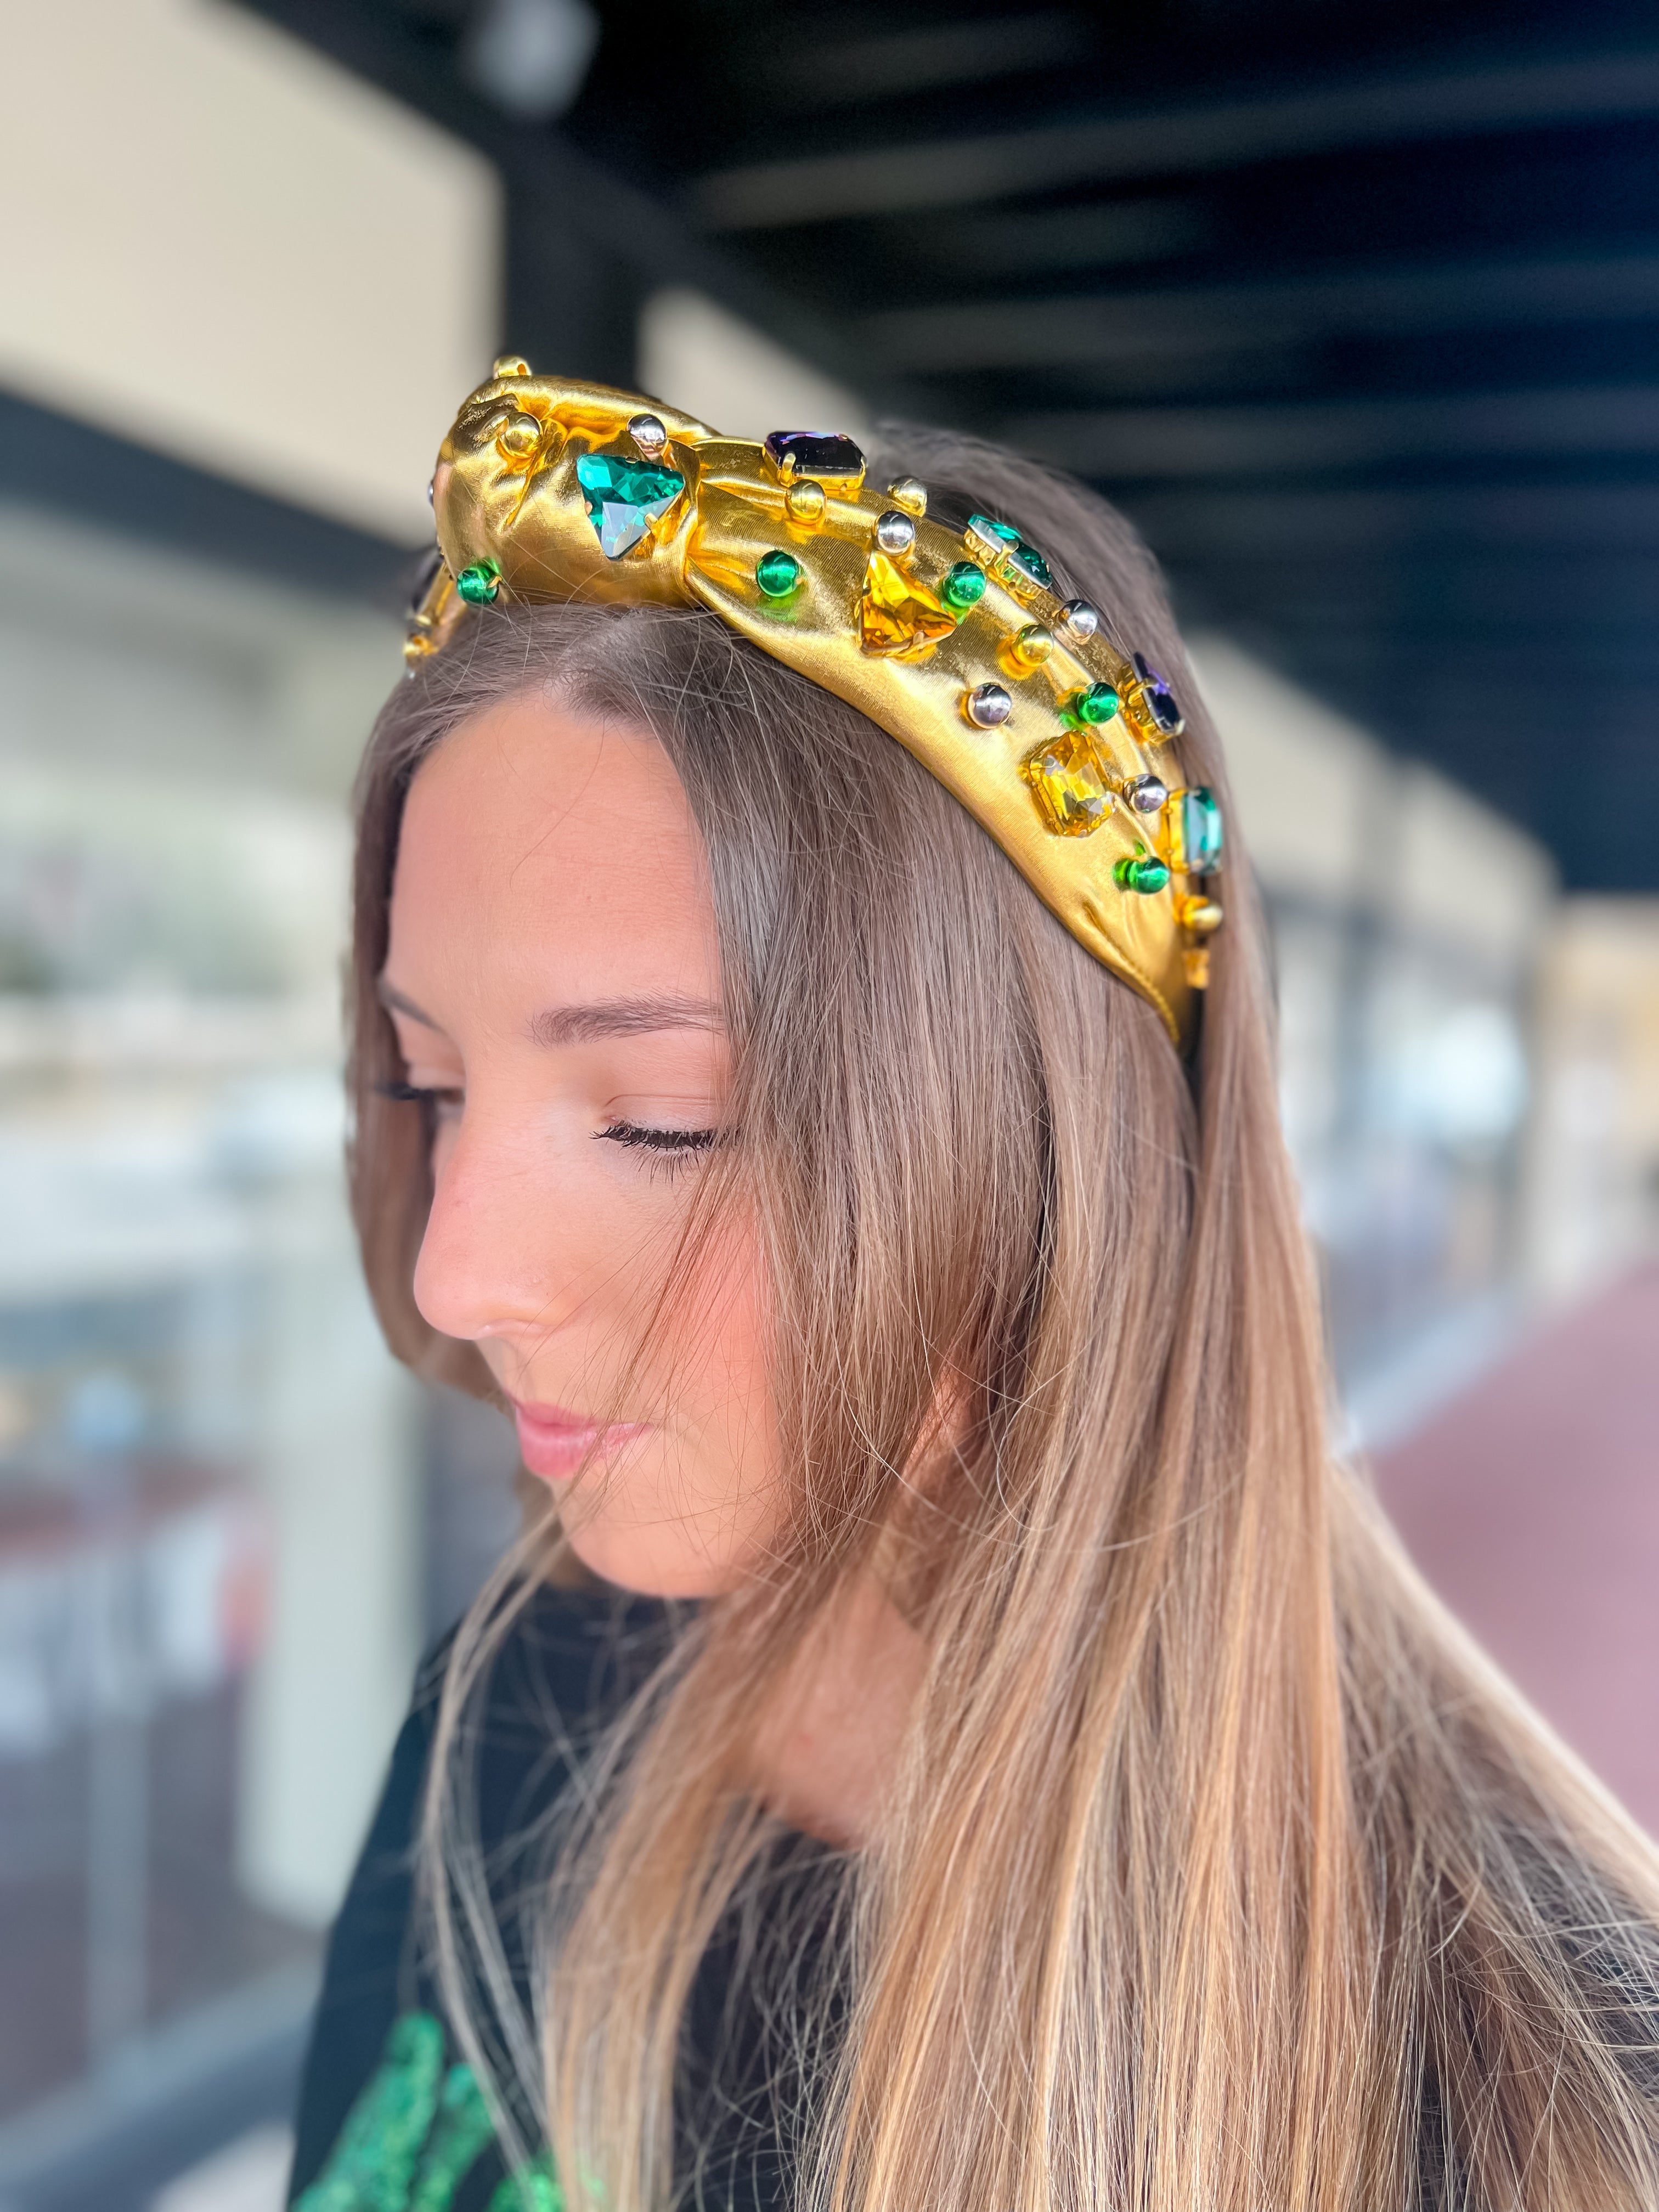 [Brianna Cannon] Gold Mardi Gras Headband-Beads and Crystals